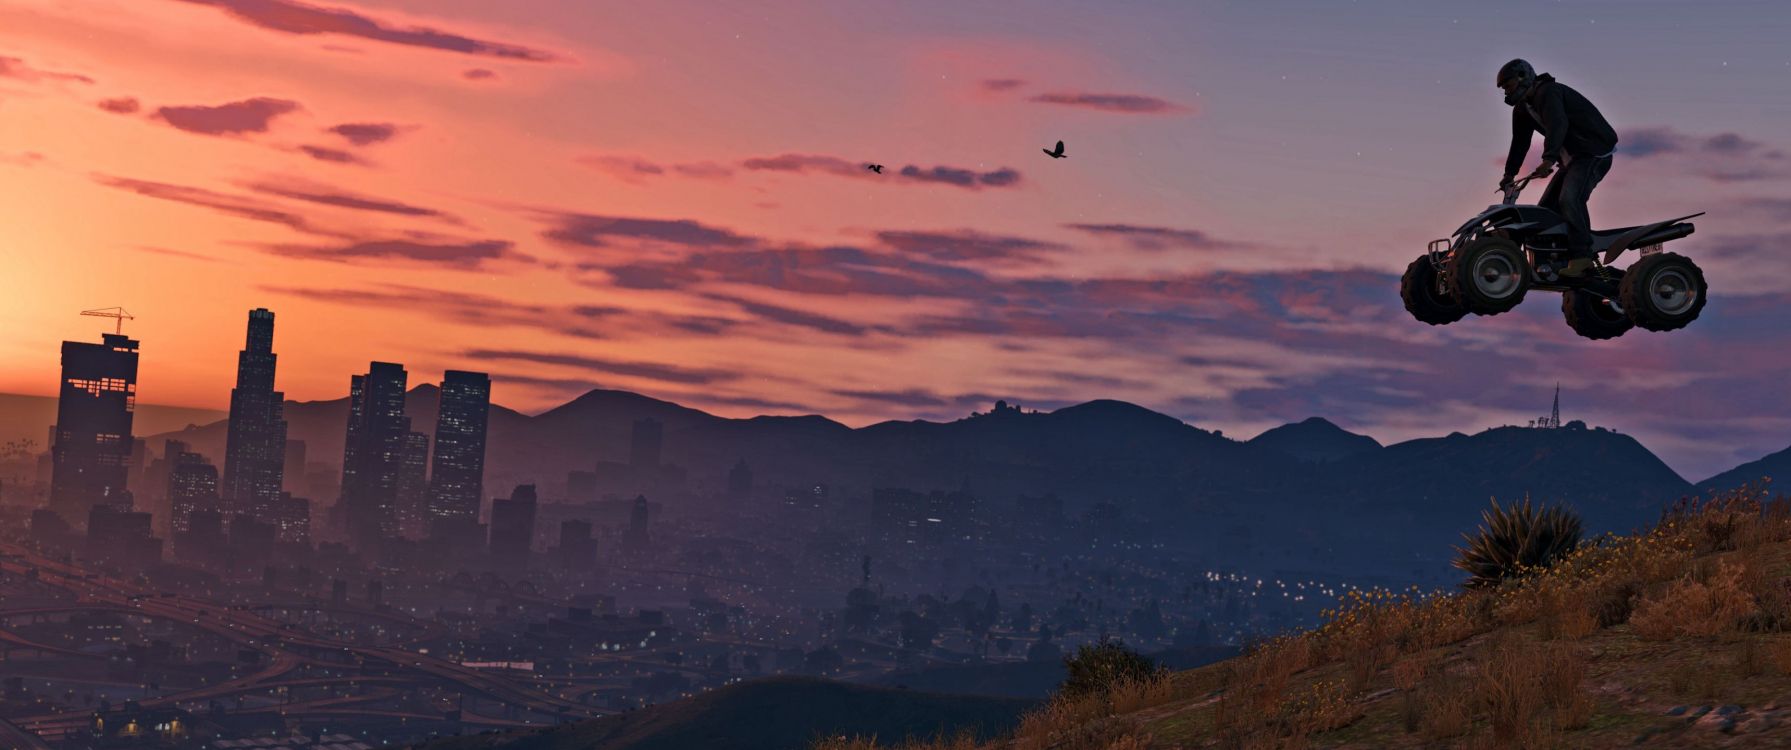 Grand Theft Auto v, Rockstar Games, Cloud, Morning, Mountain Range. Wallpaper in 3440x1440 Resolution